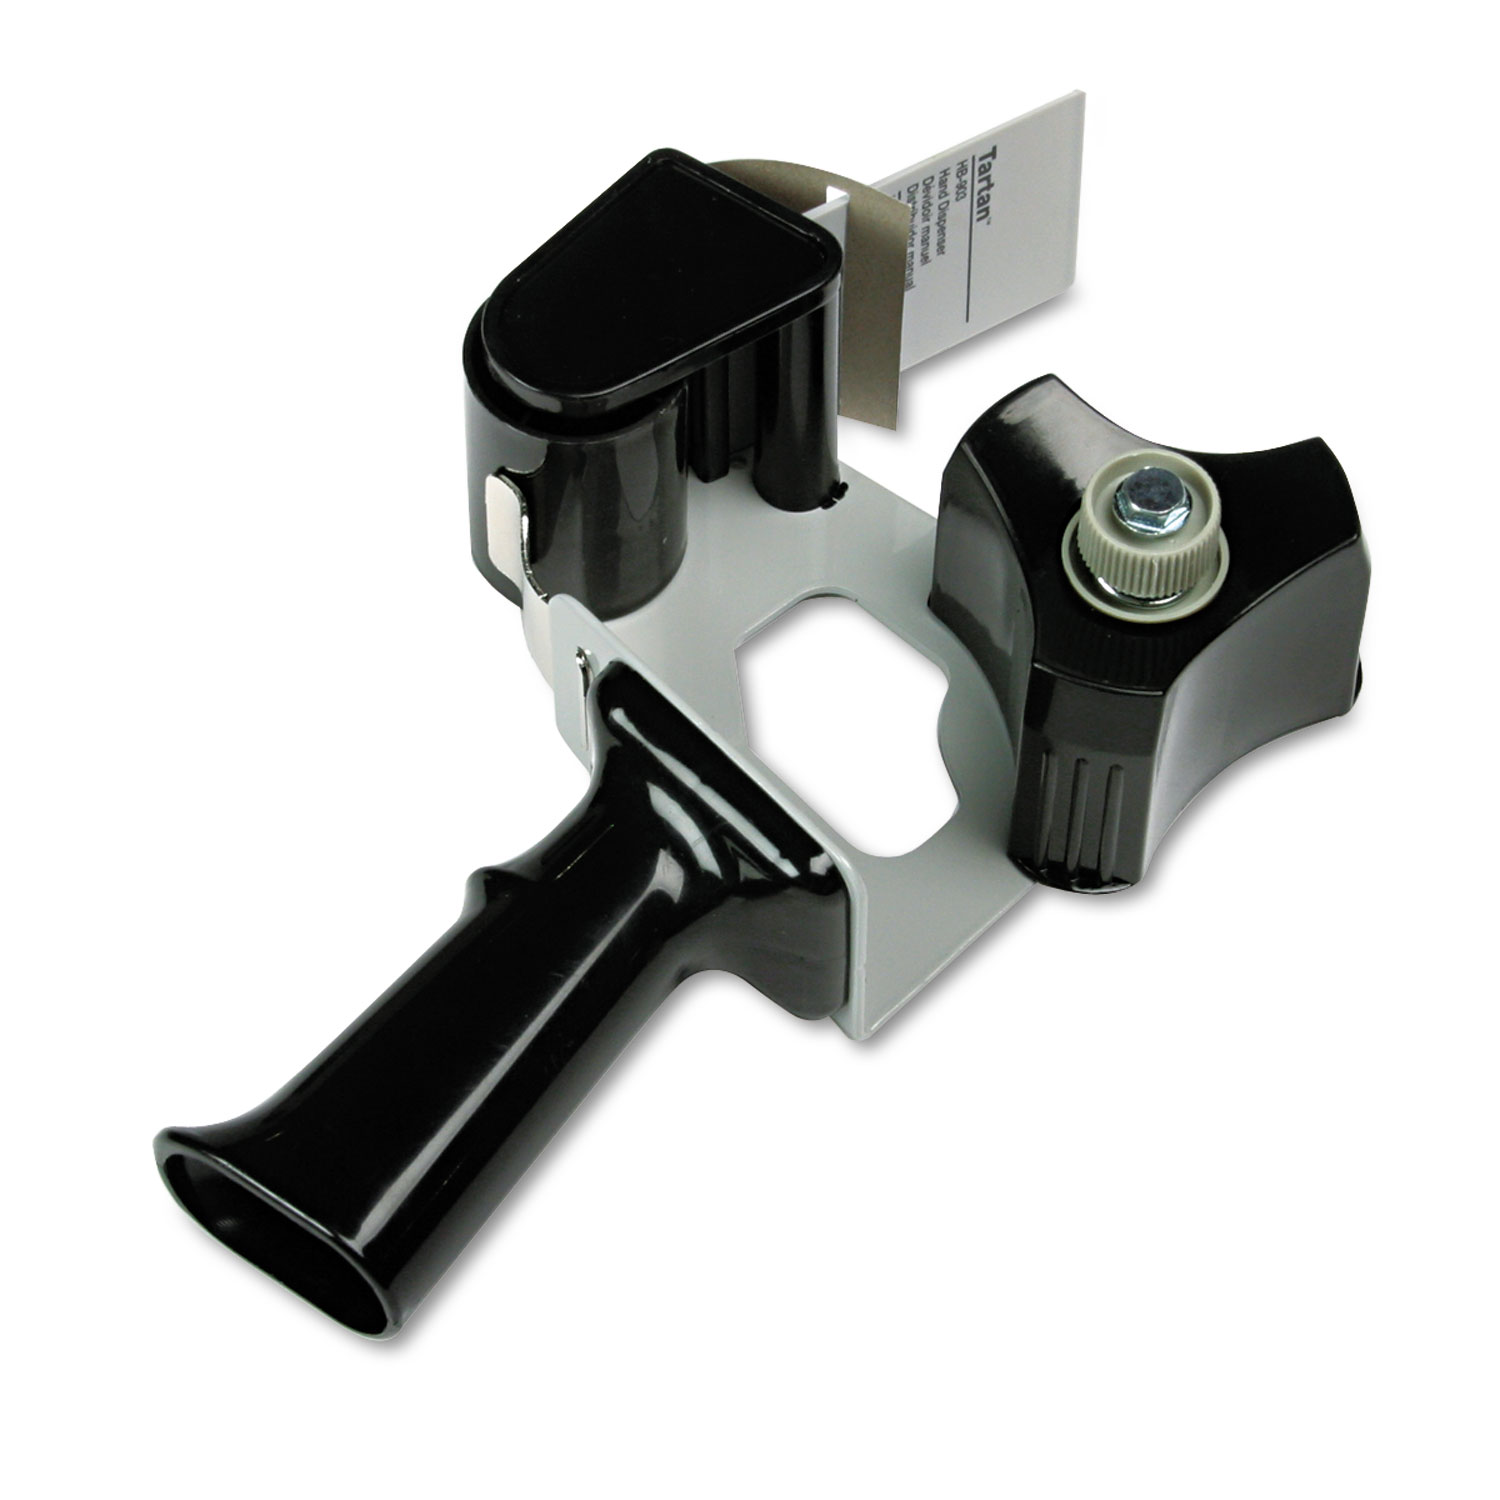  Tartan HB903 Pistol Grip Box Sealing Tape Dispenser, 3 Core, Black (MMMHB903) 